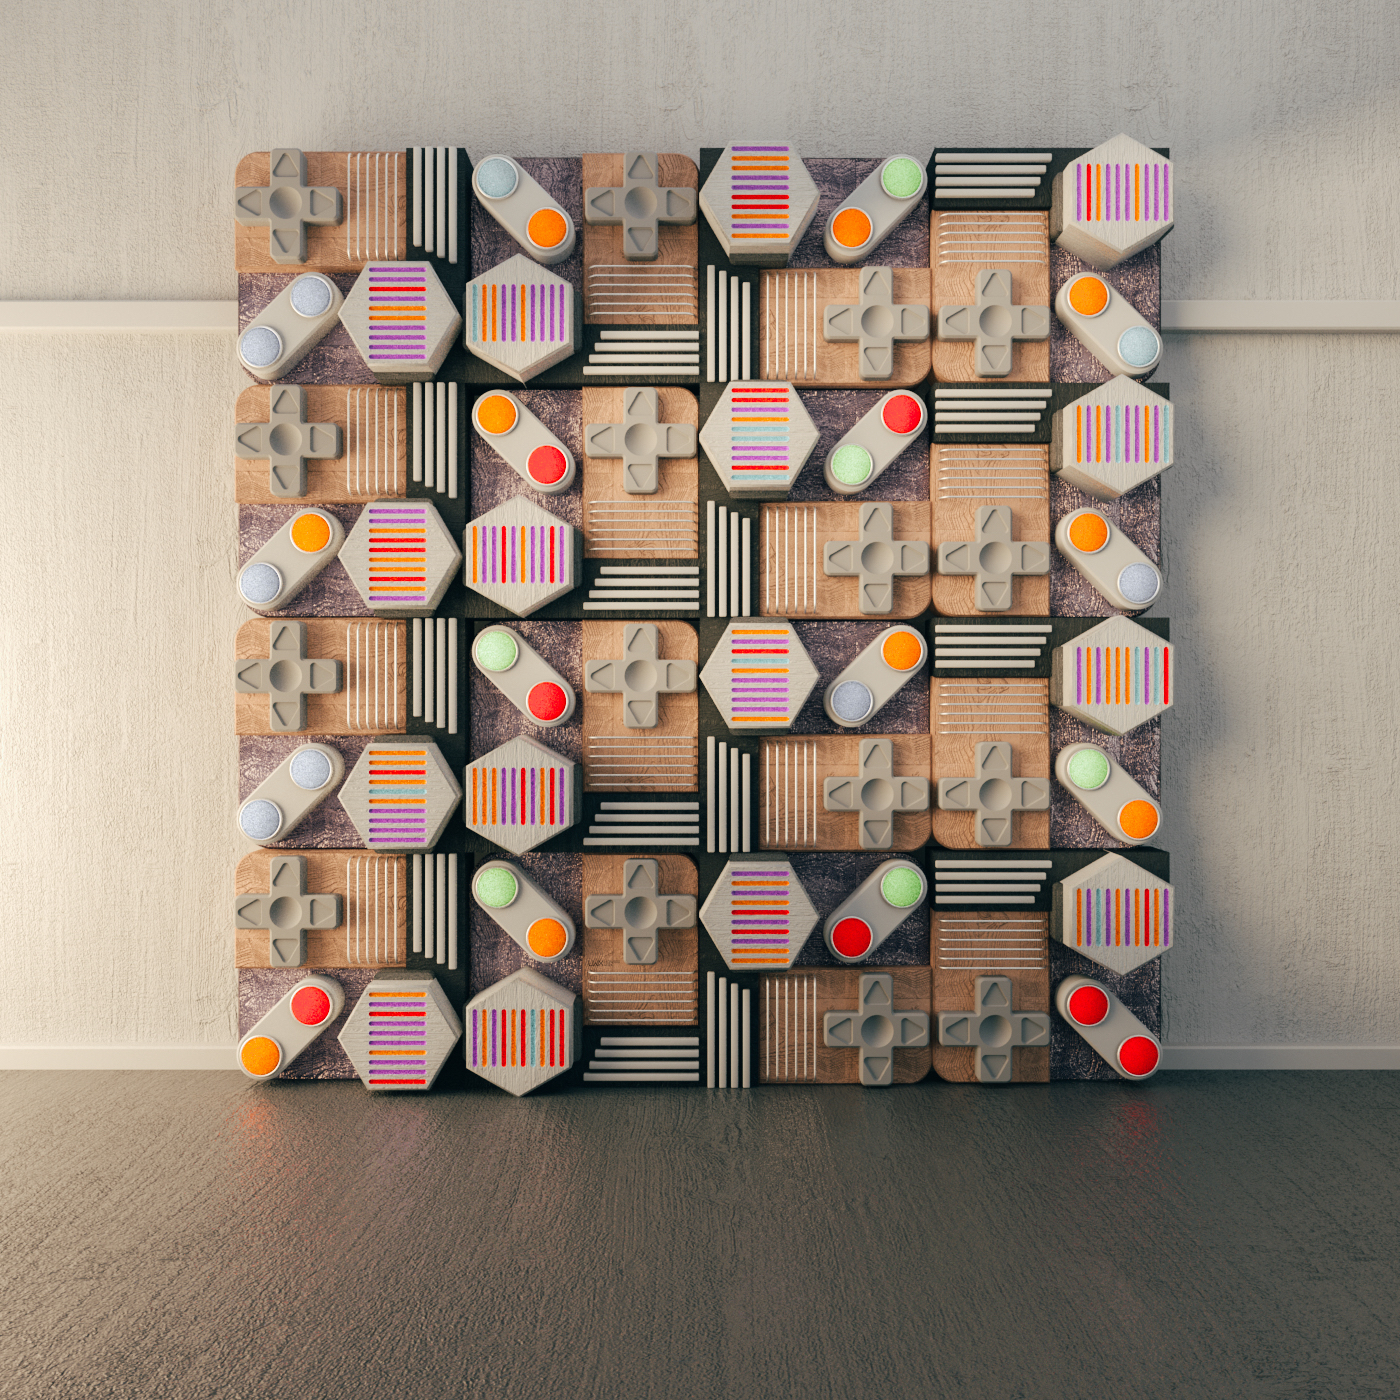 pattern retrogame module wood sculpture pantone tetris joypad installation 3dpattern